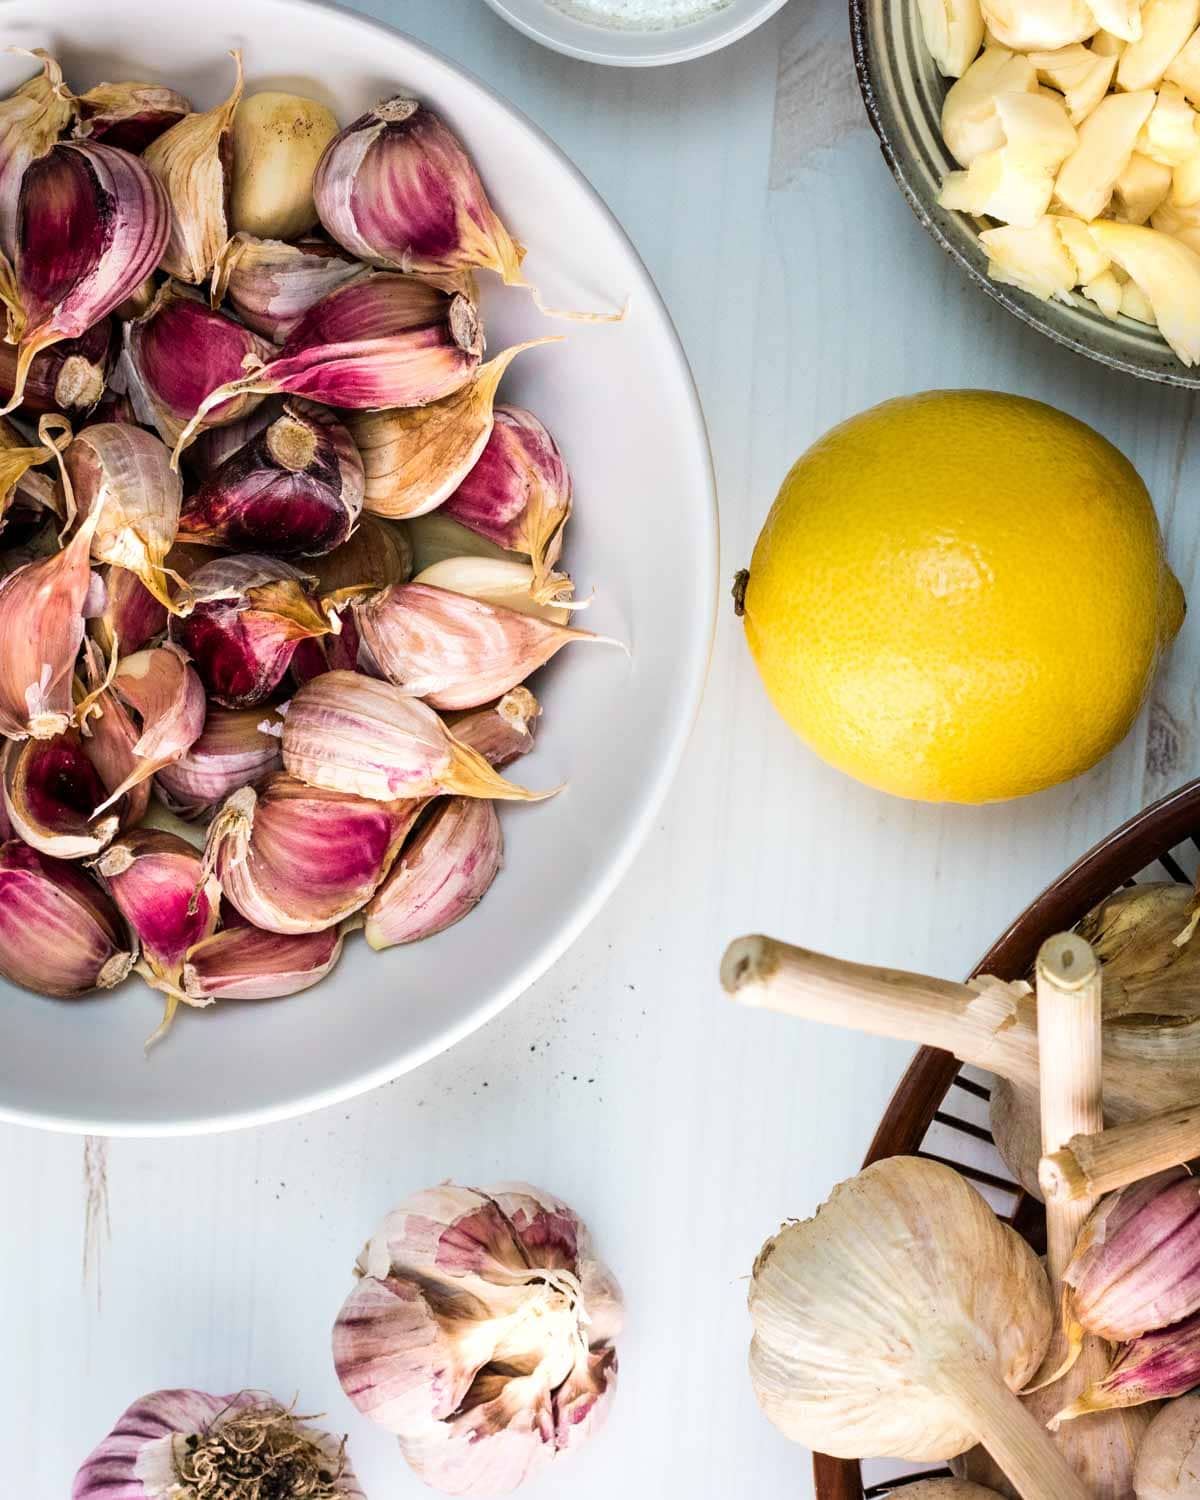 Ingredients for making toum are lemon garlic oil and salt